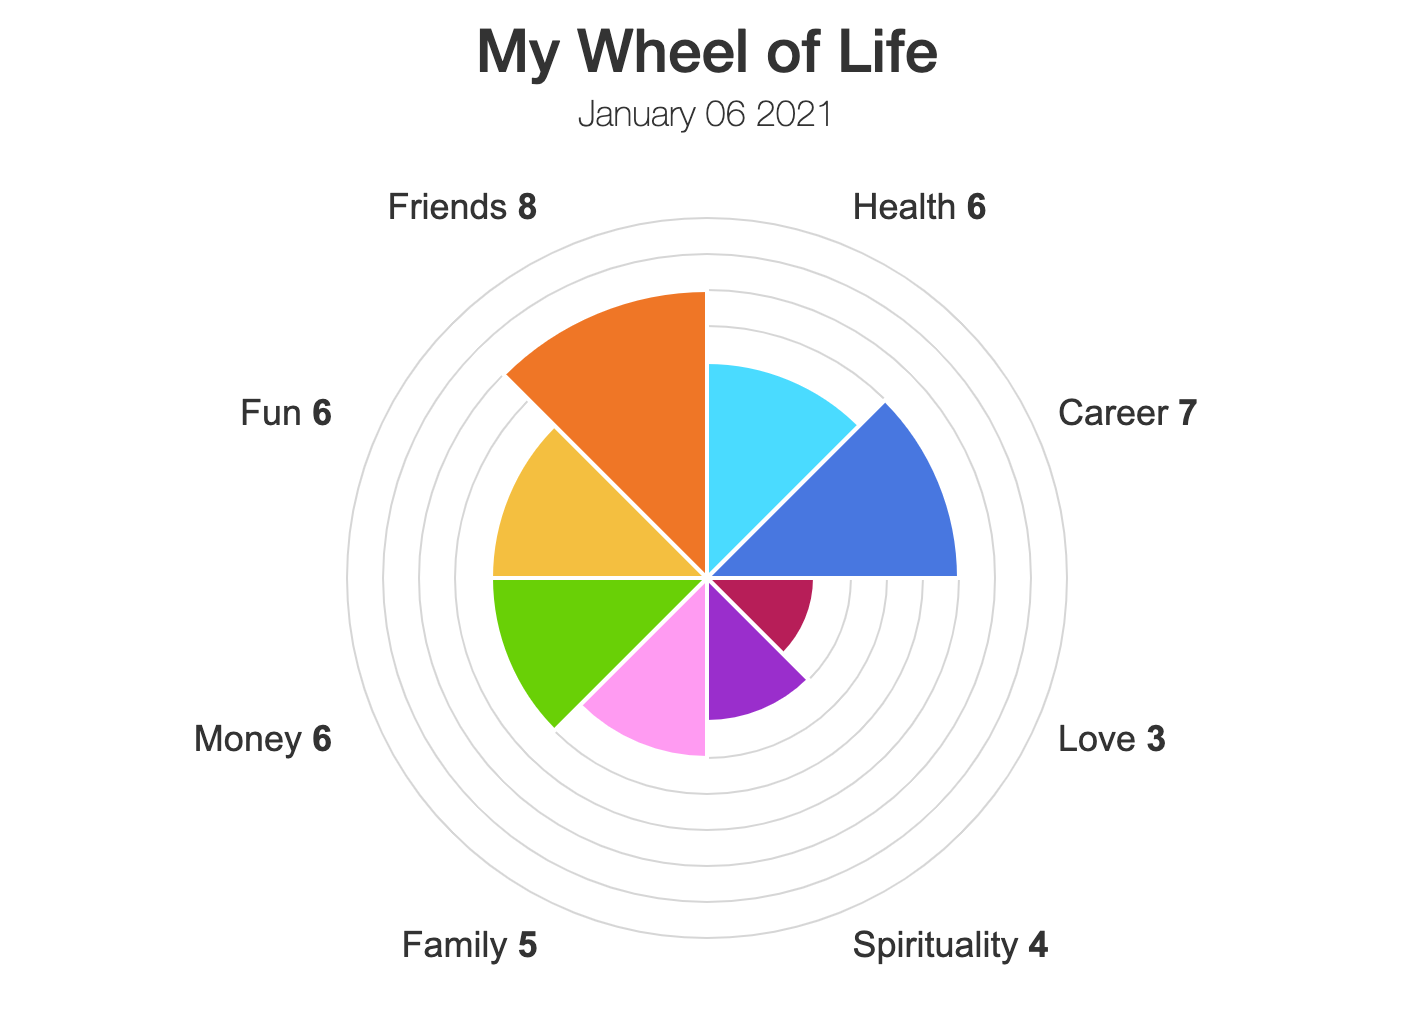 My wheel of life